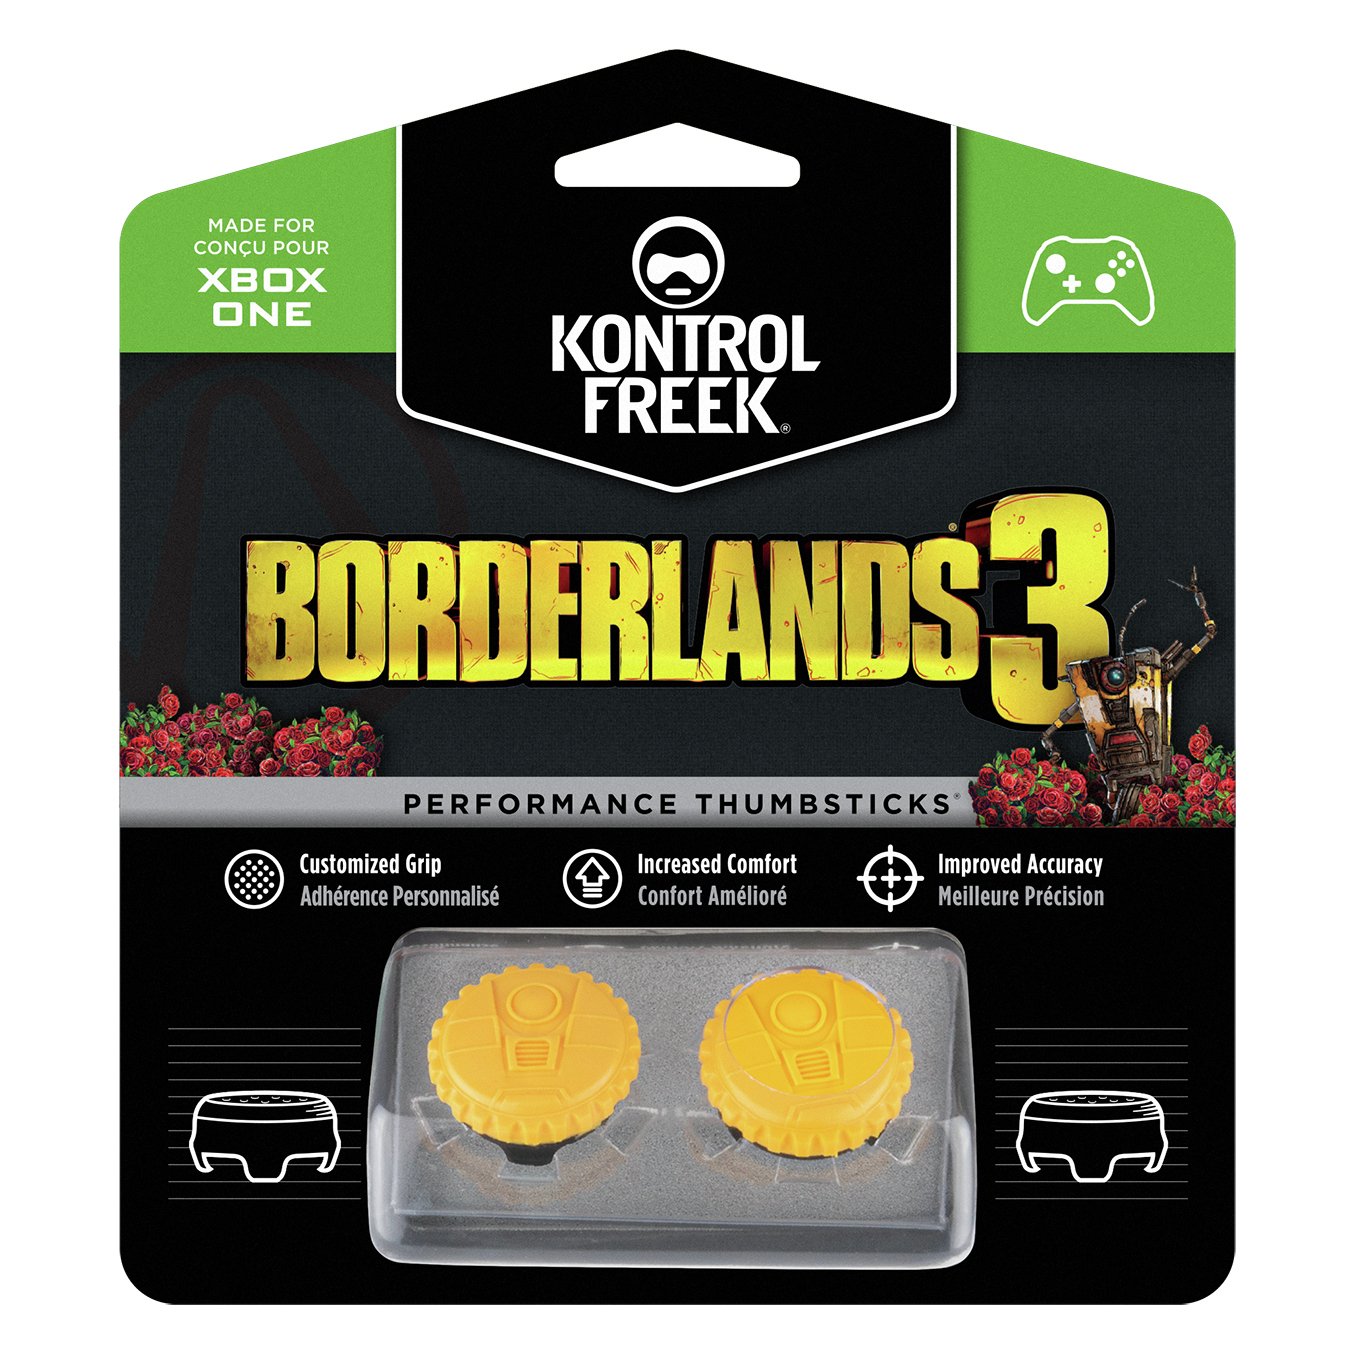 KontrolFreek Borderlands 3 Xbox One Performance Thumbsticks